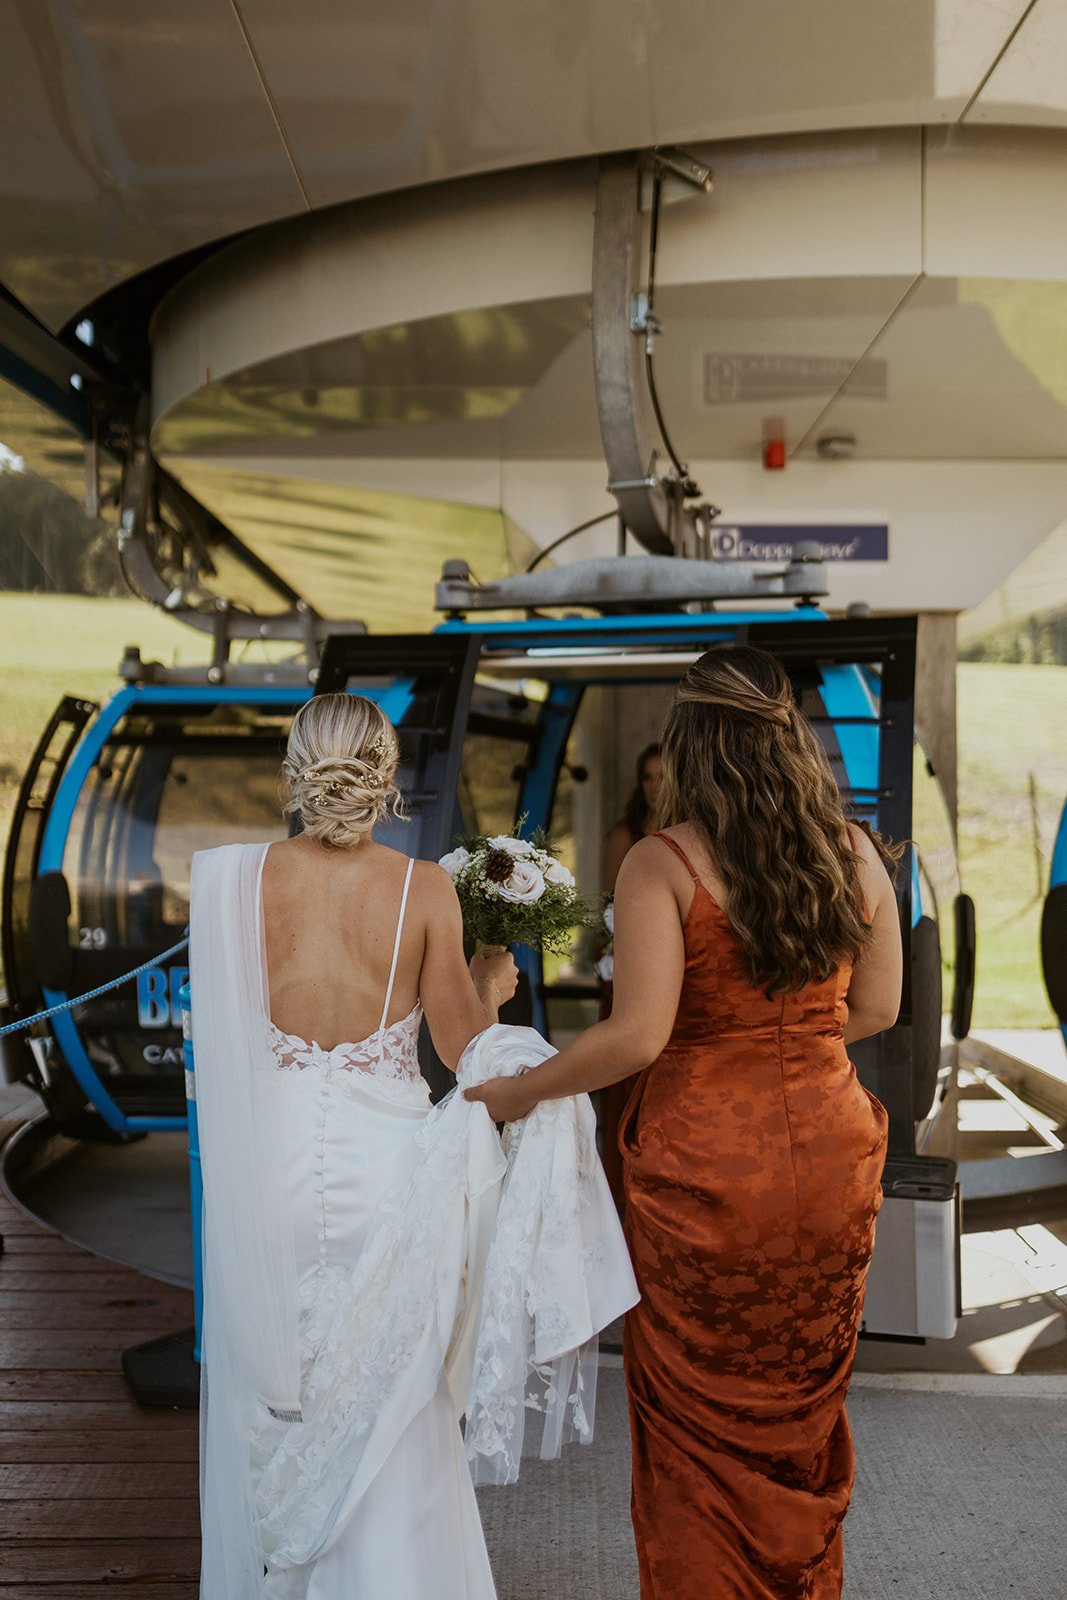 The bride and her bridesmaid prepare to get into the gondola. 